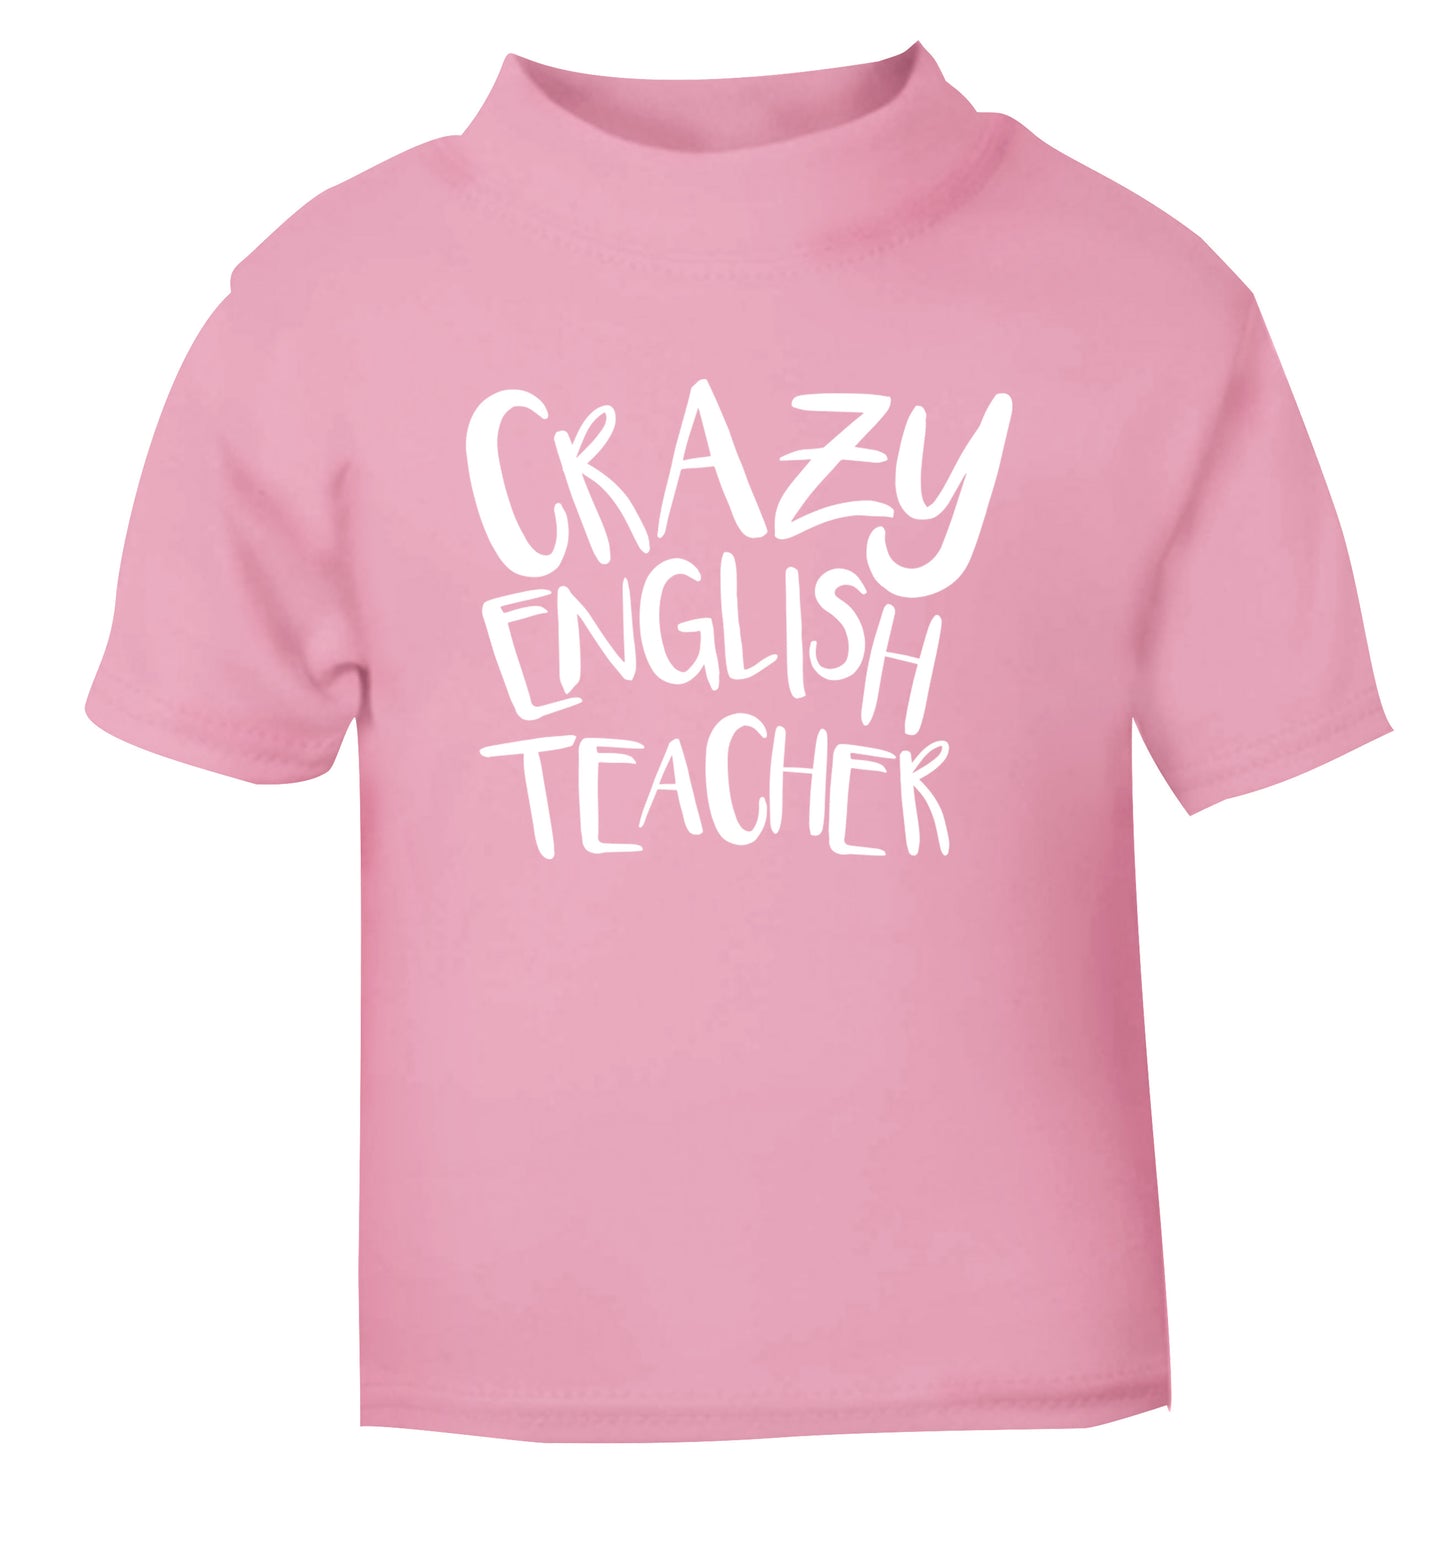 Crazy English Teacher light pink Baby Toddler Tshirt 2 Years